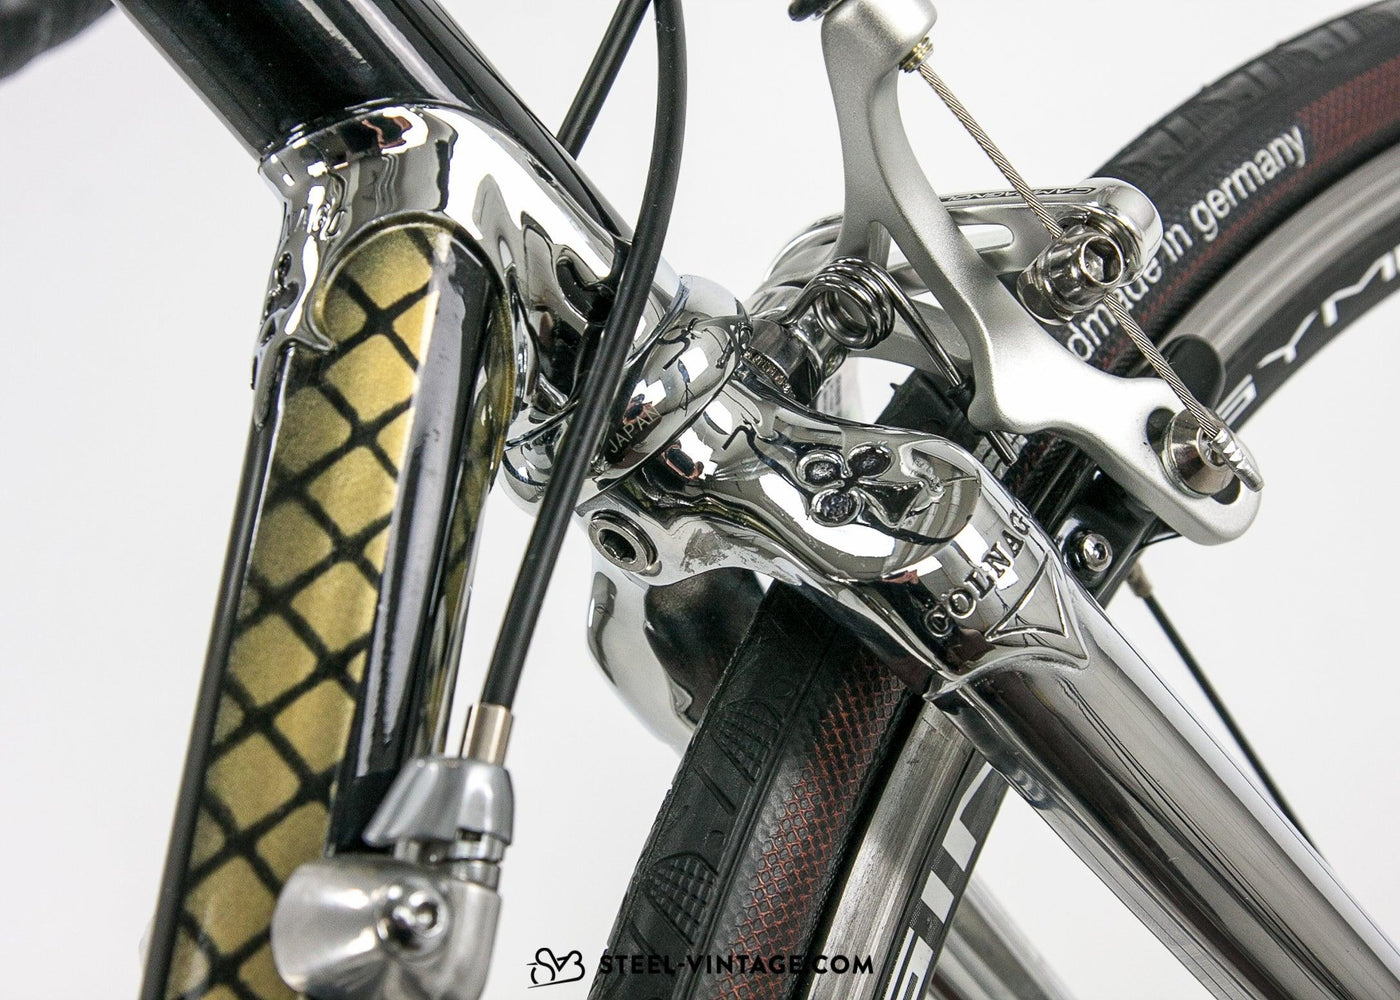 Colnago Master Post Modern Steel Road Bike - Steel Vintage Bikes